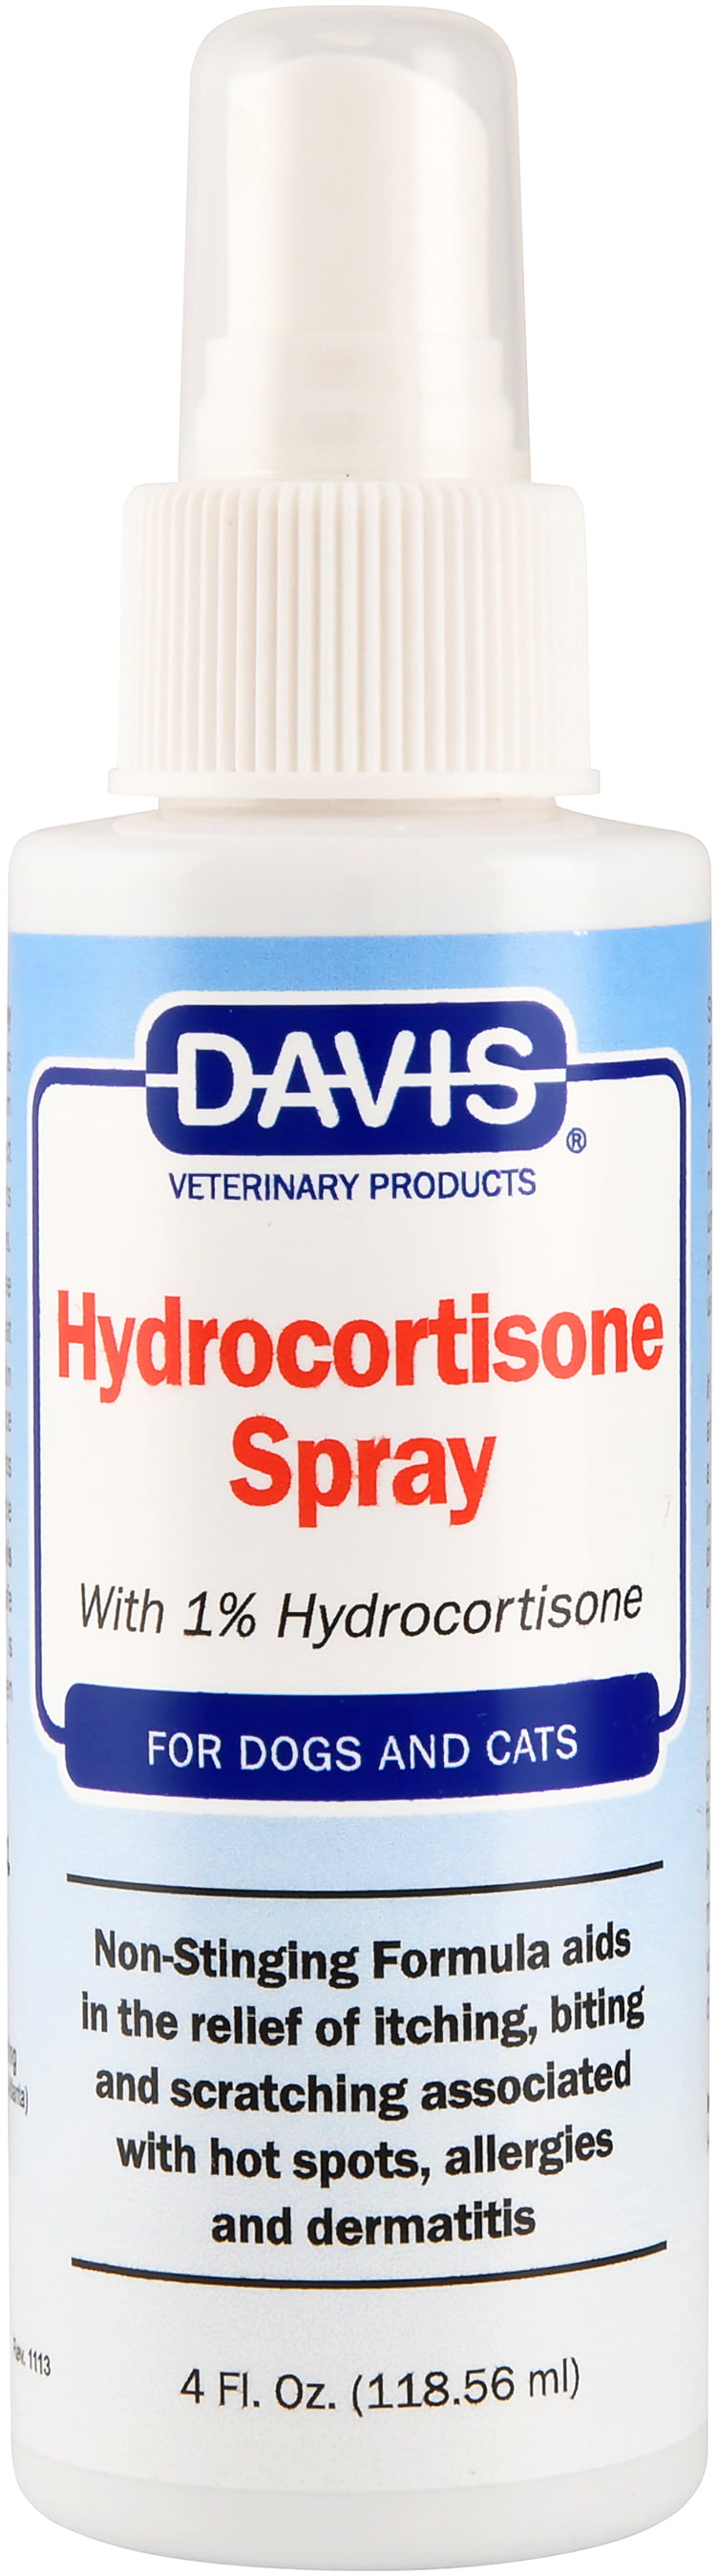 petsmart hydrocortisone spray